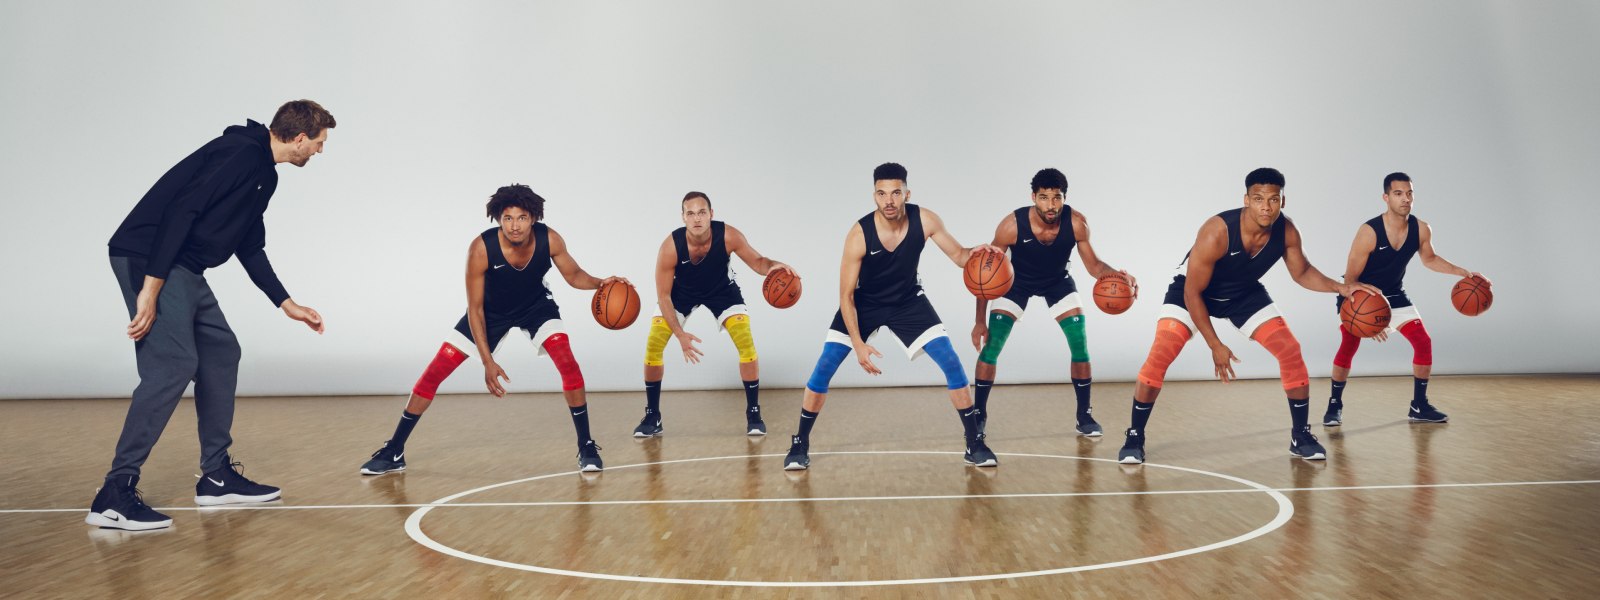 Dirk Nowitzki coacht sechs Basketballer mit bunten Kniebandagen